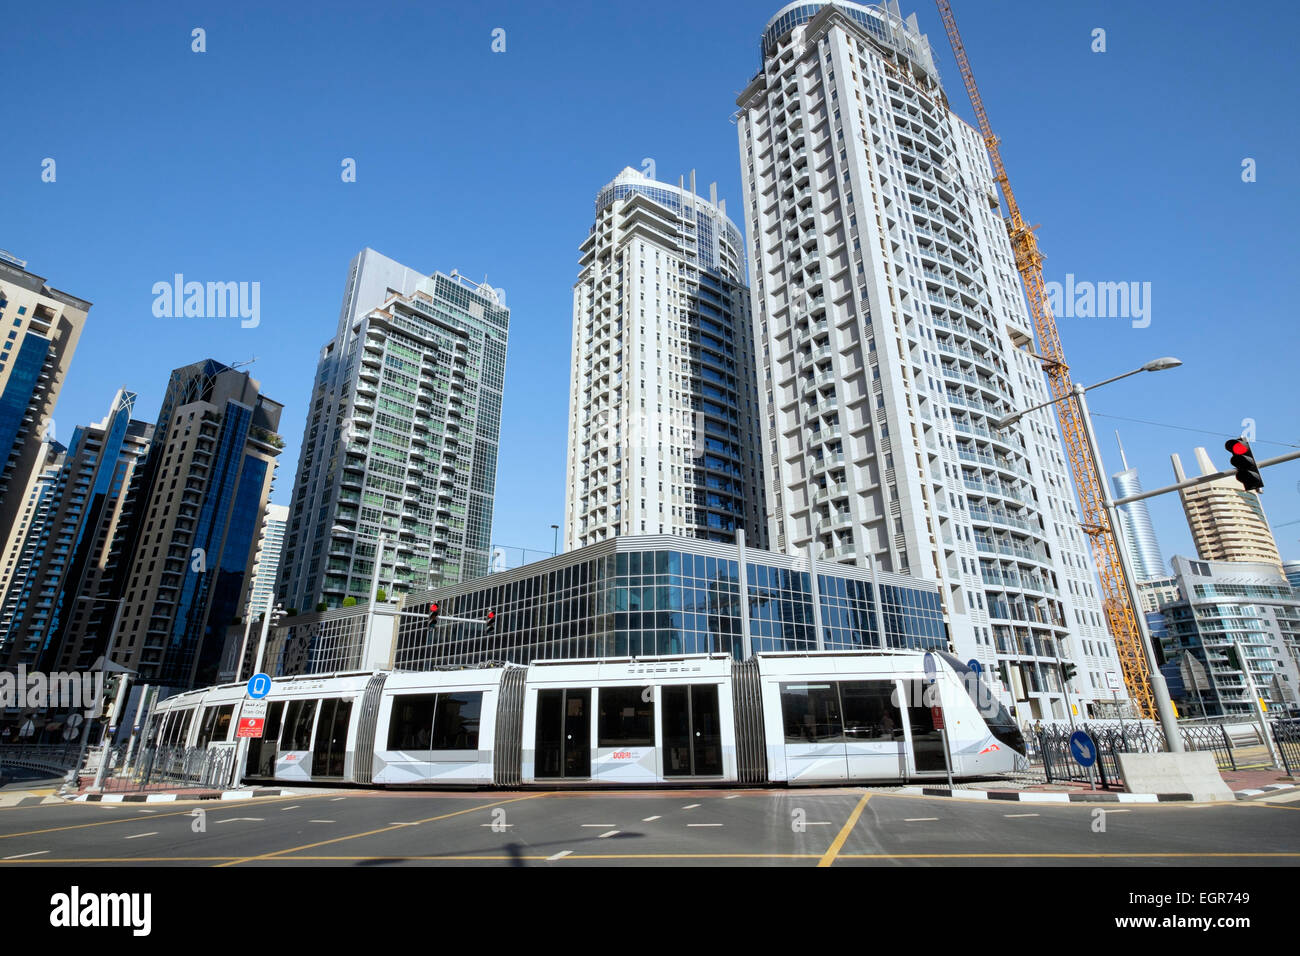 New Dubai tram in Marina district of New Dubai in United Arab Emirates Stock Photo